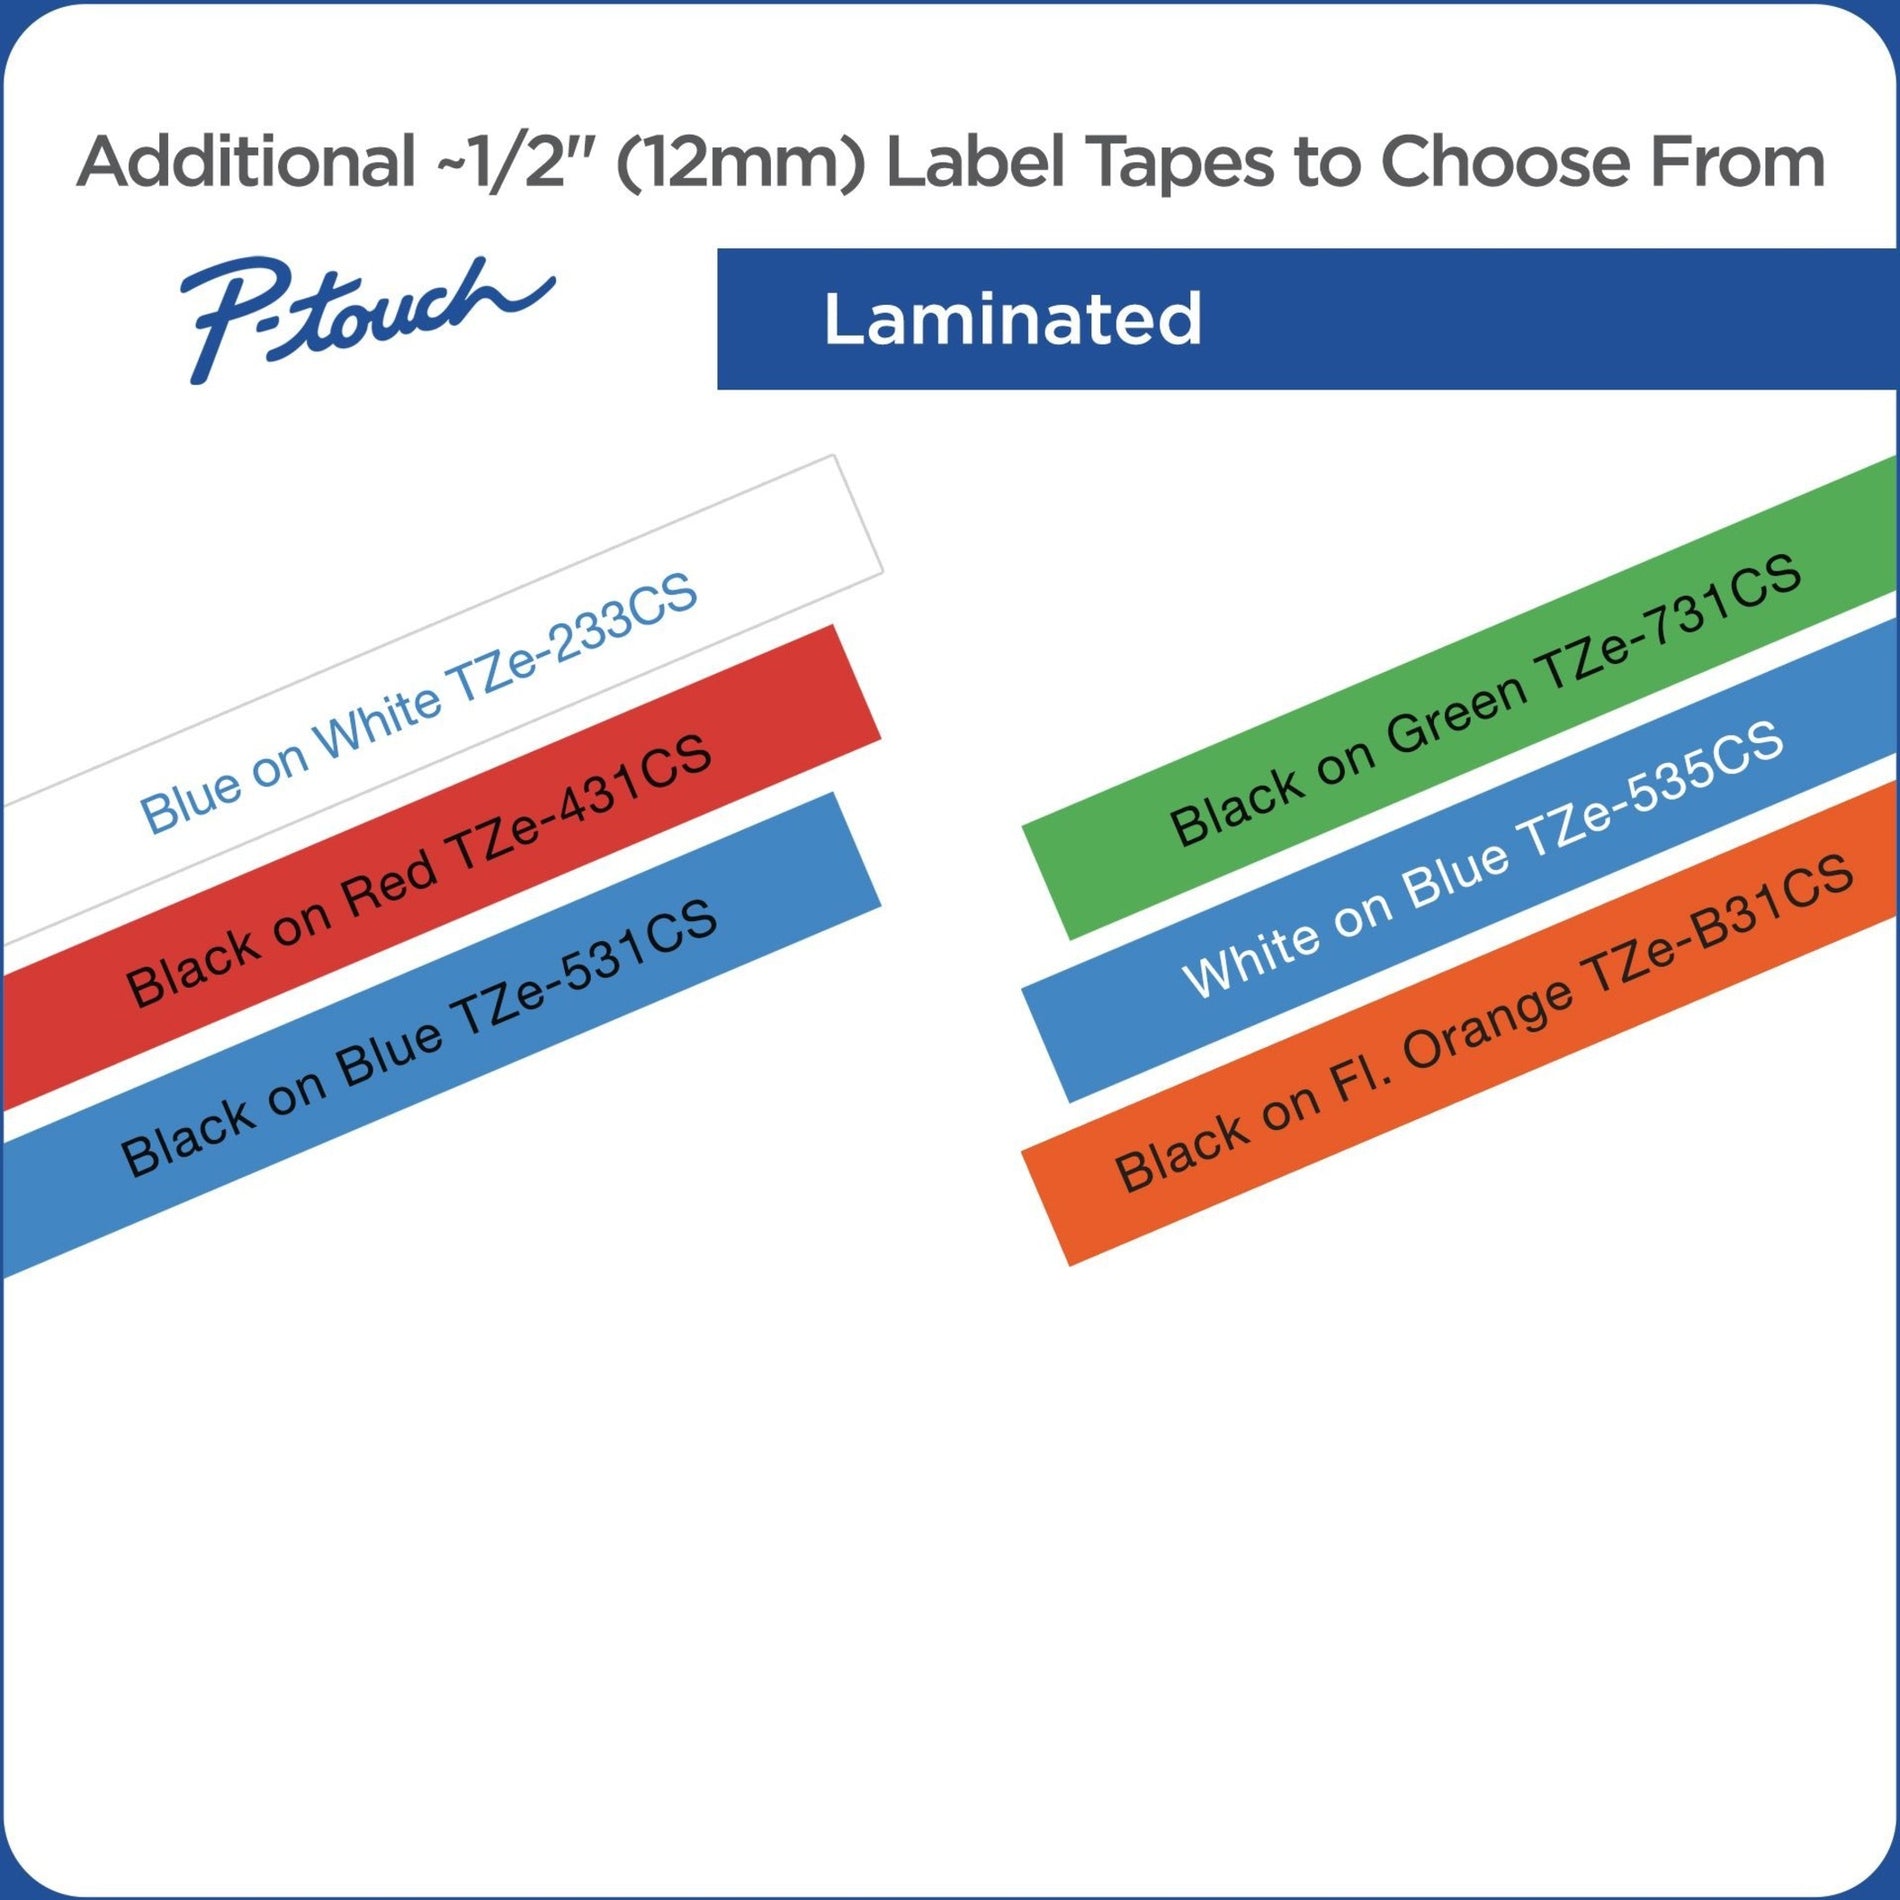 Brother TZE531CS Label Tape, 0.47" x 26.2', Black on Blue, Easy Peel, Fade Resistant, Smudge Resistant